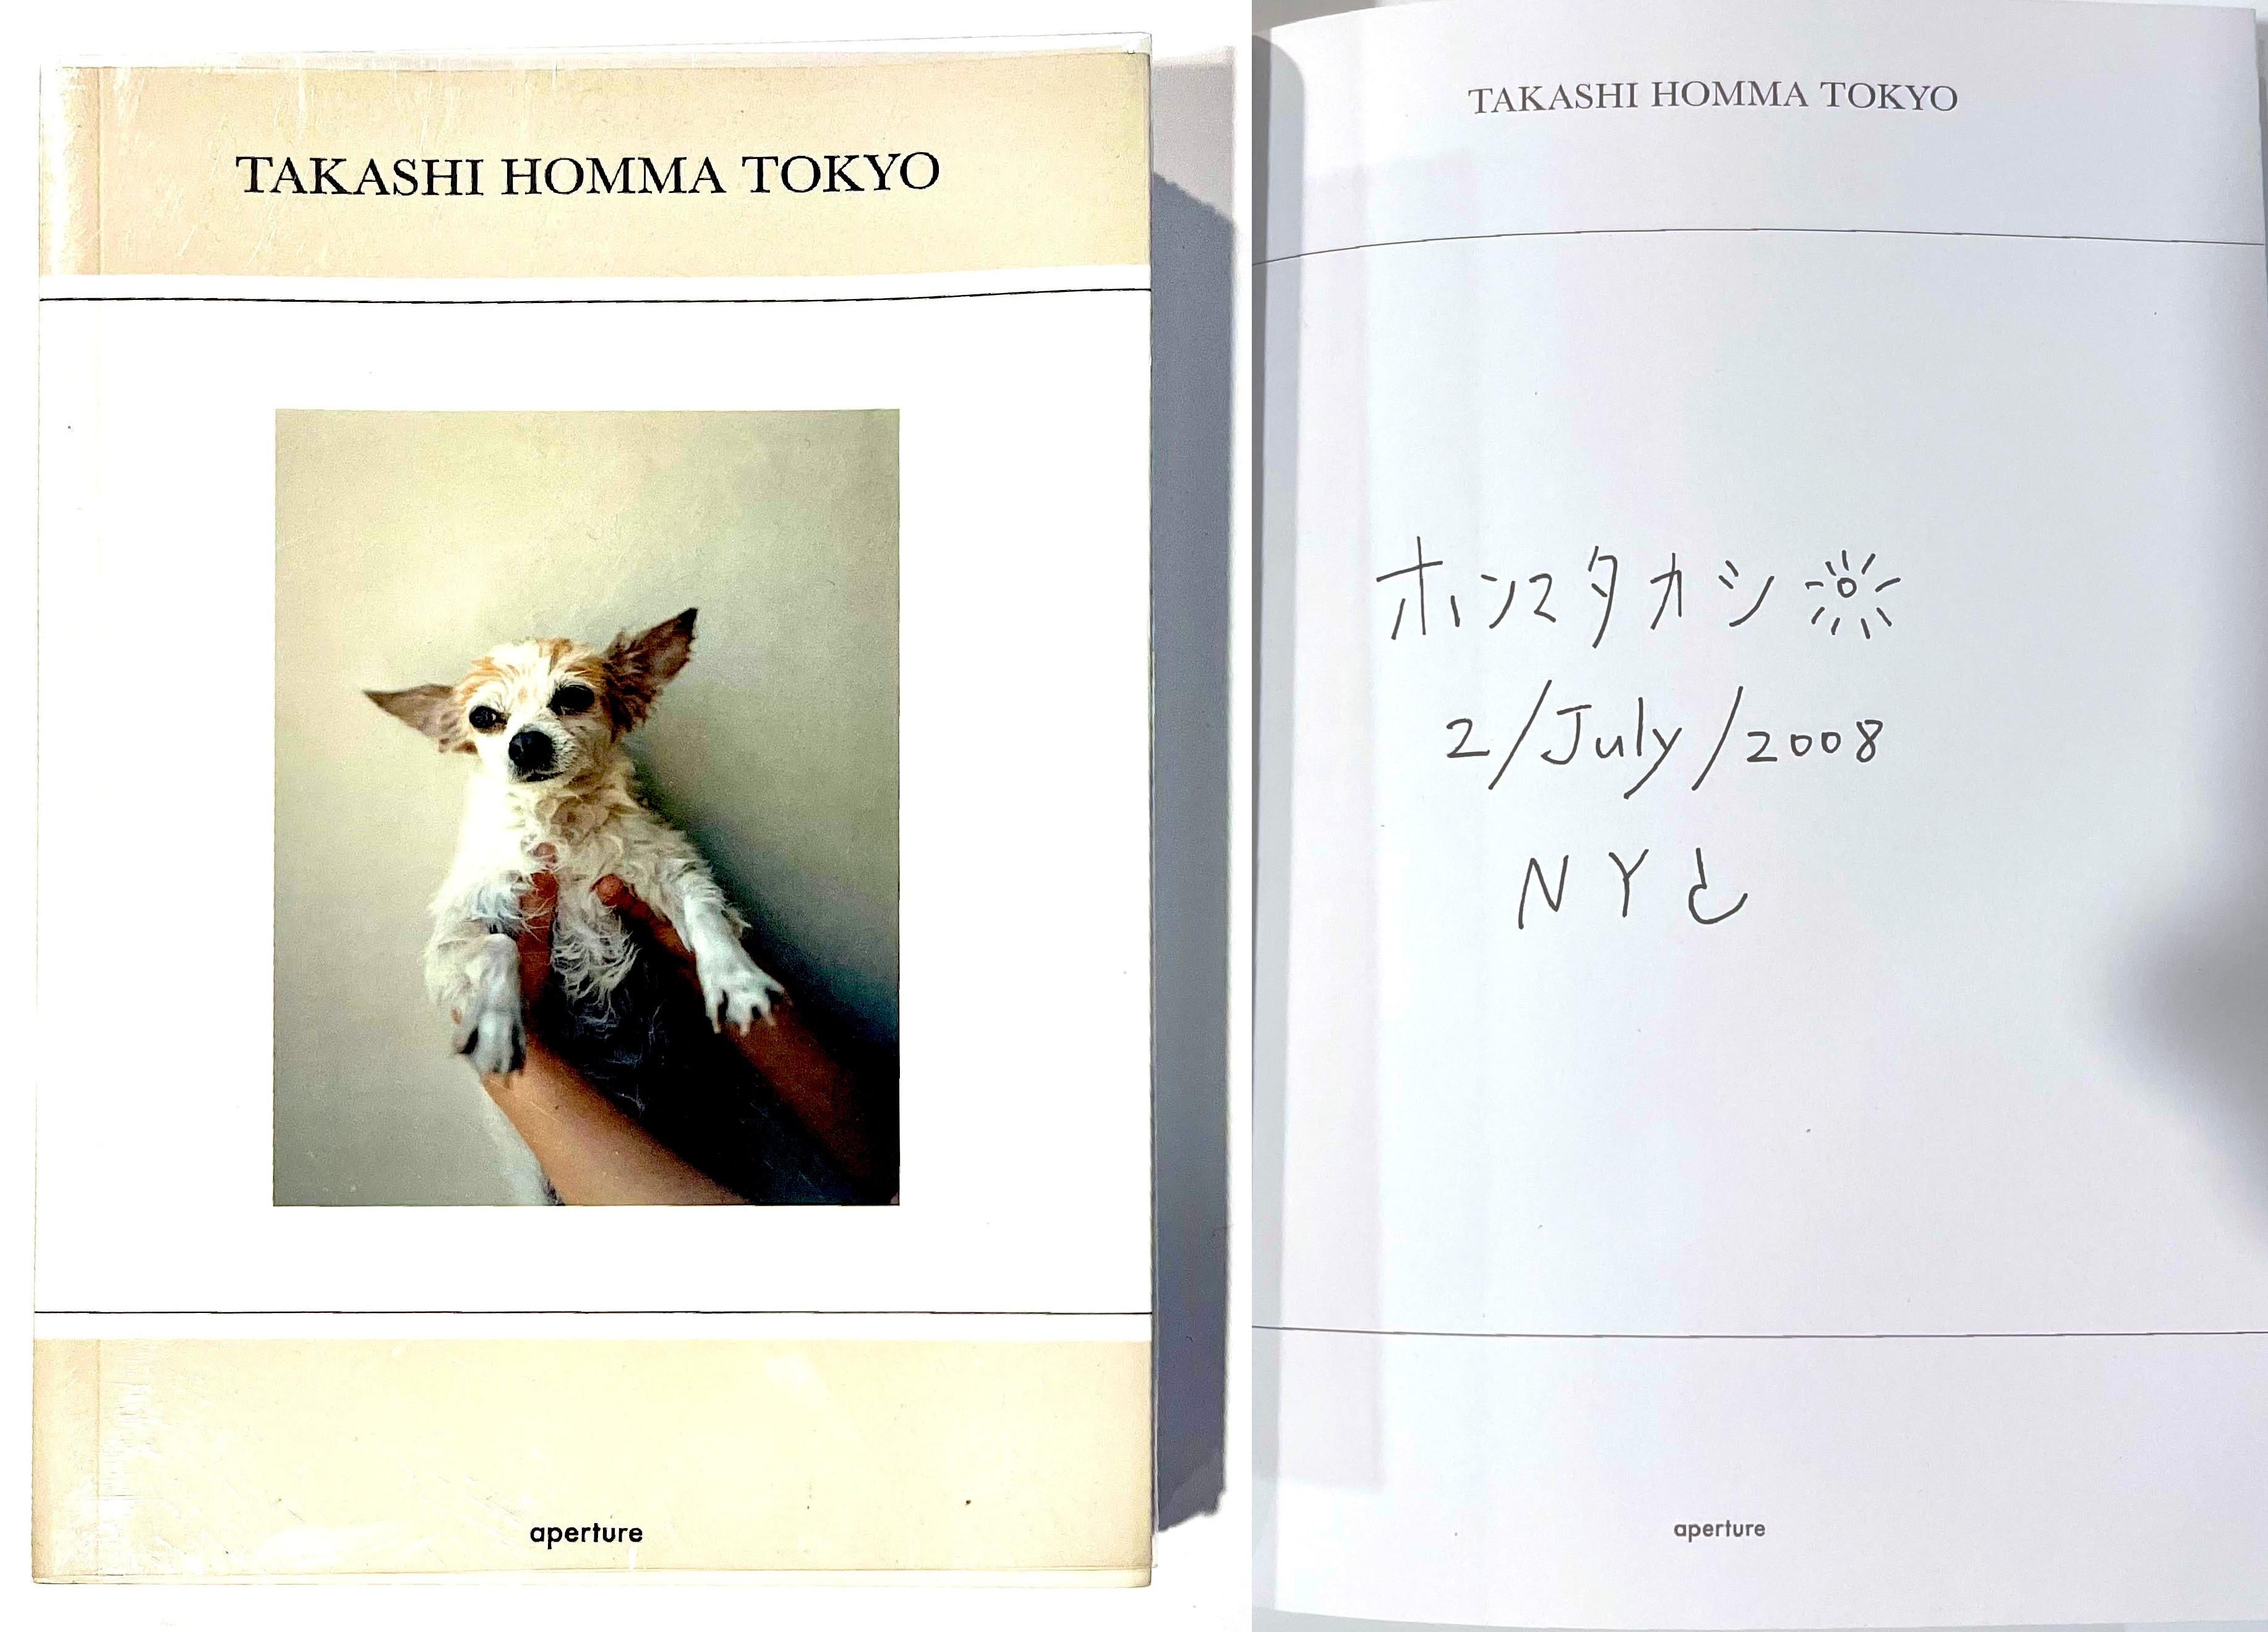 Takashi Homma Tokio monografía, firmada a mano, inscrita y fechada por Takashi Homma